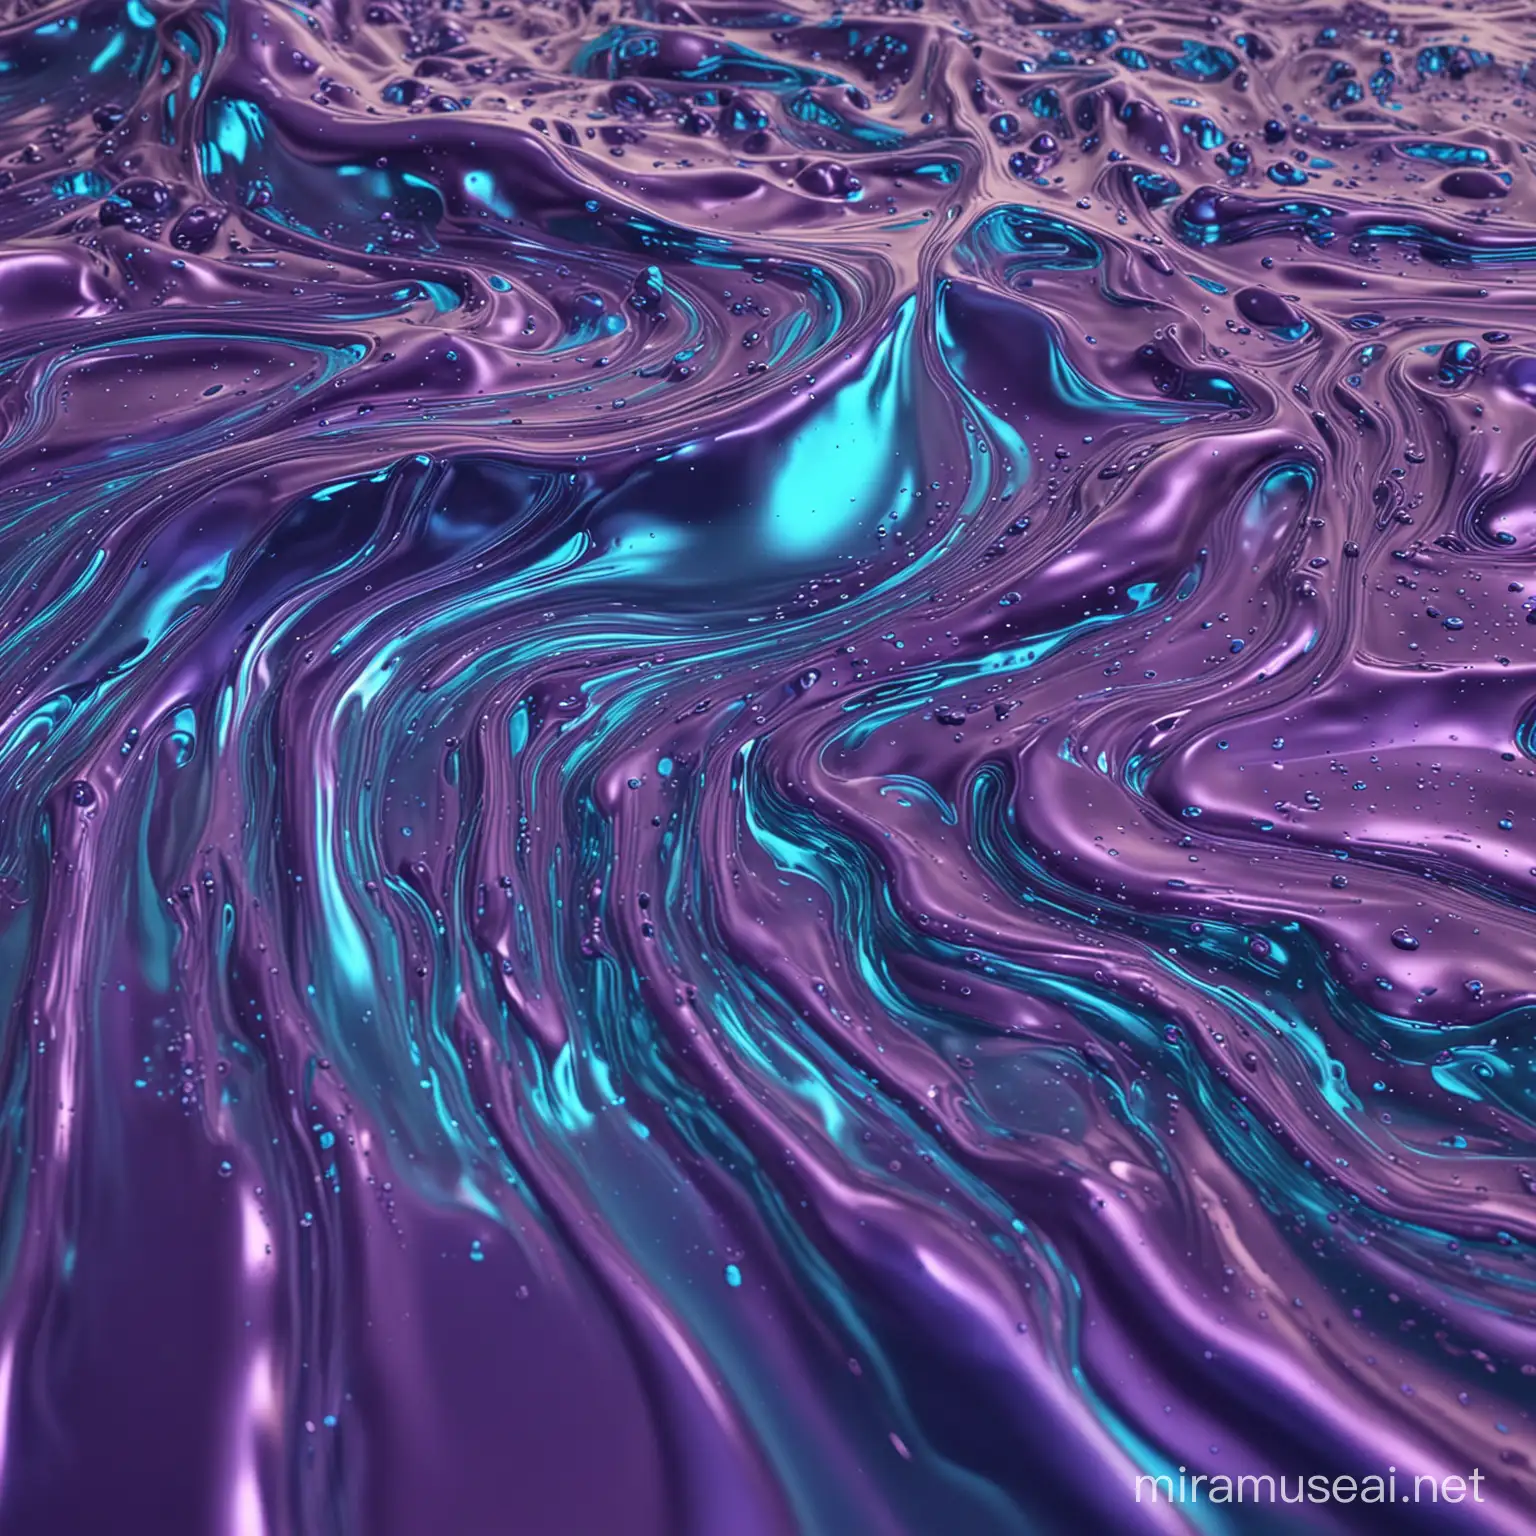 3D image of metalic fluid, blue, purple